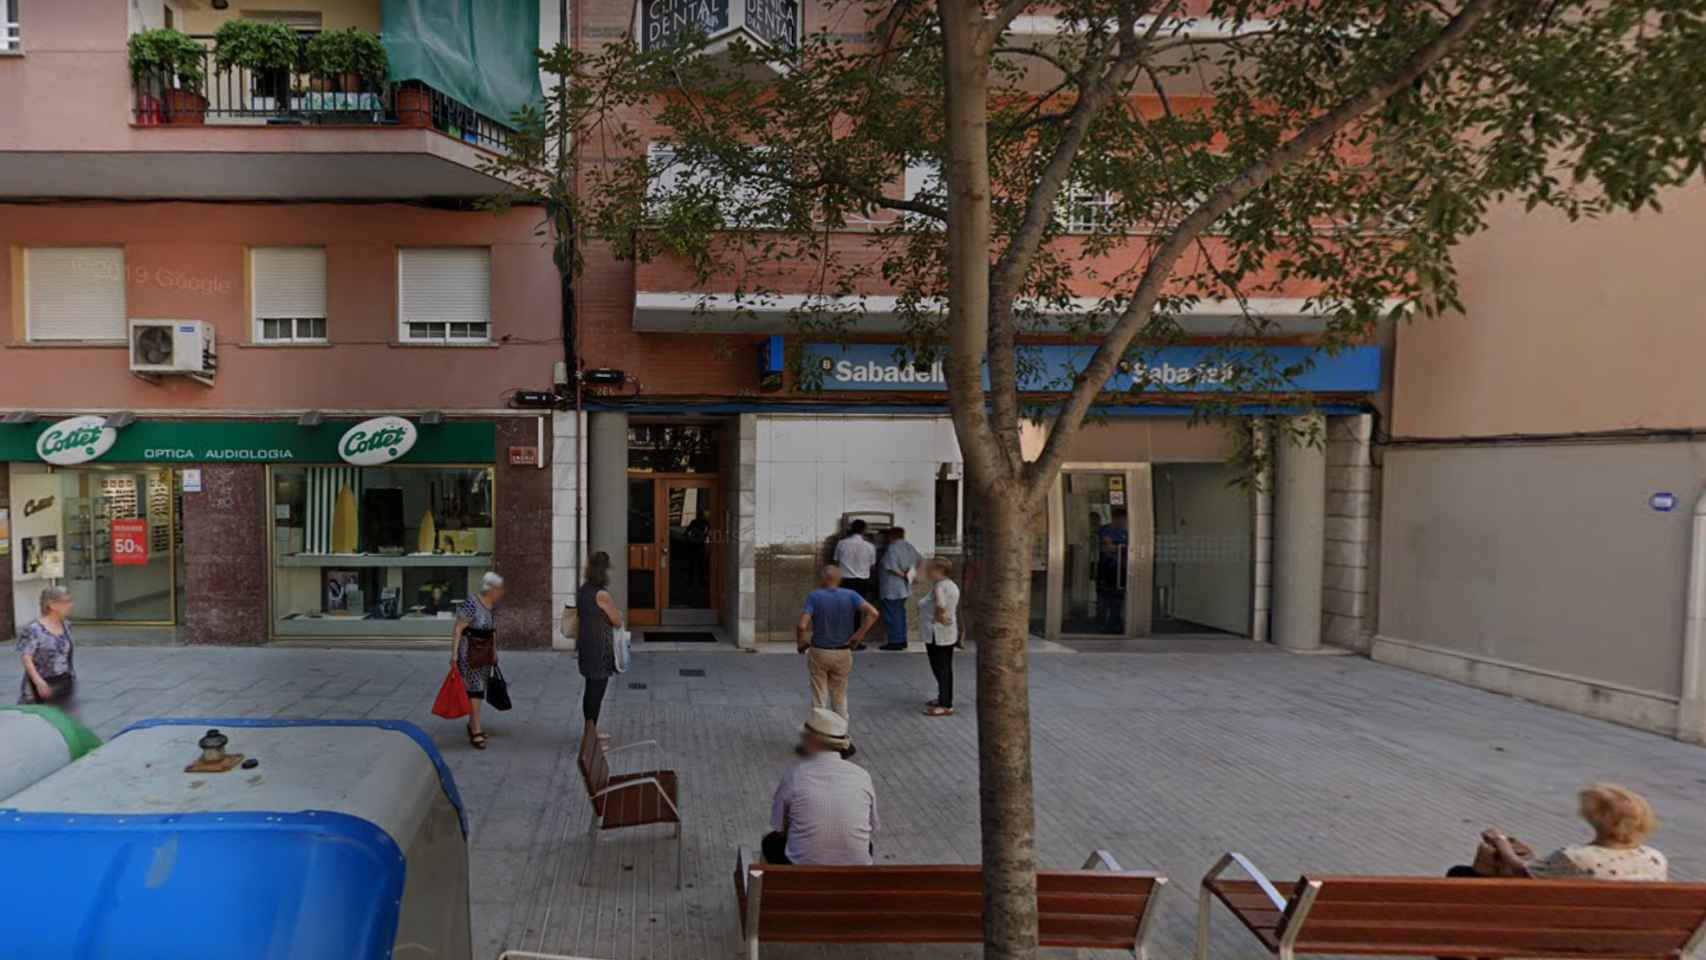 Una de las entidades bancarias del Sabadell en Sant Andreu / GOOGLE MAPS